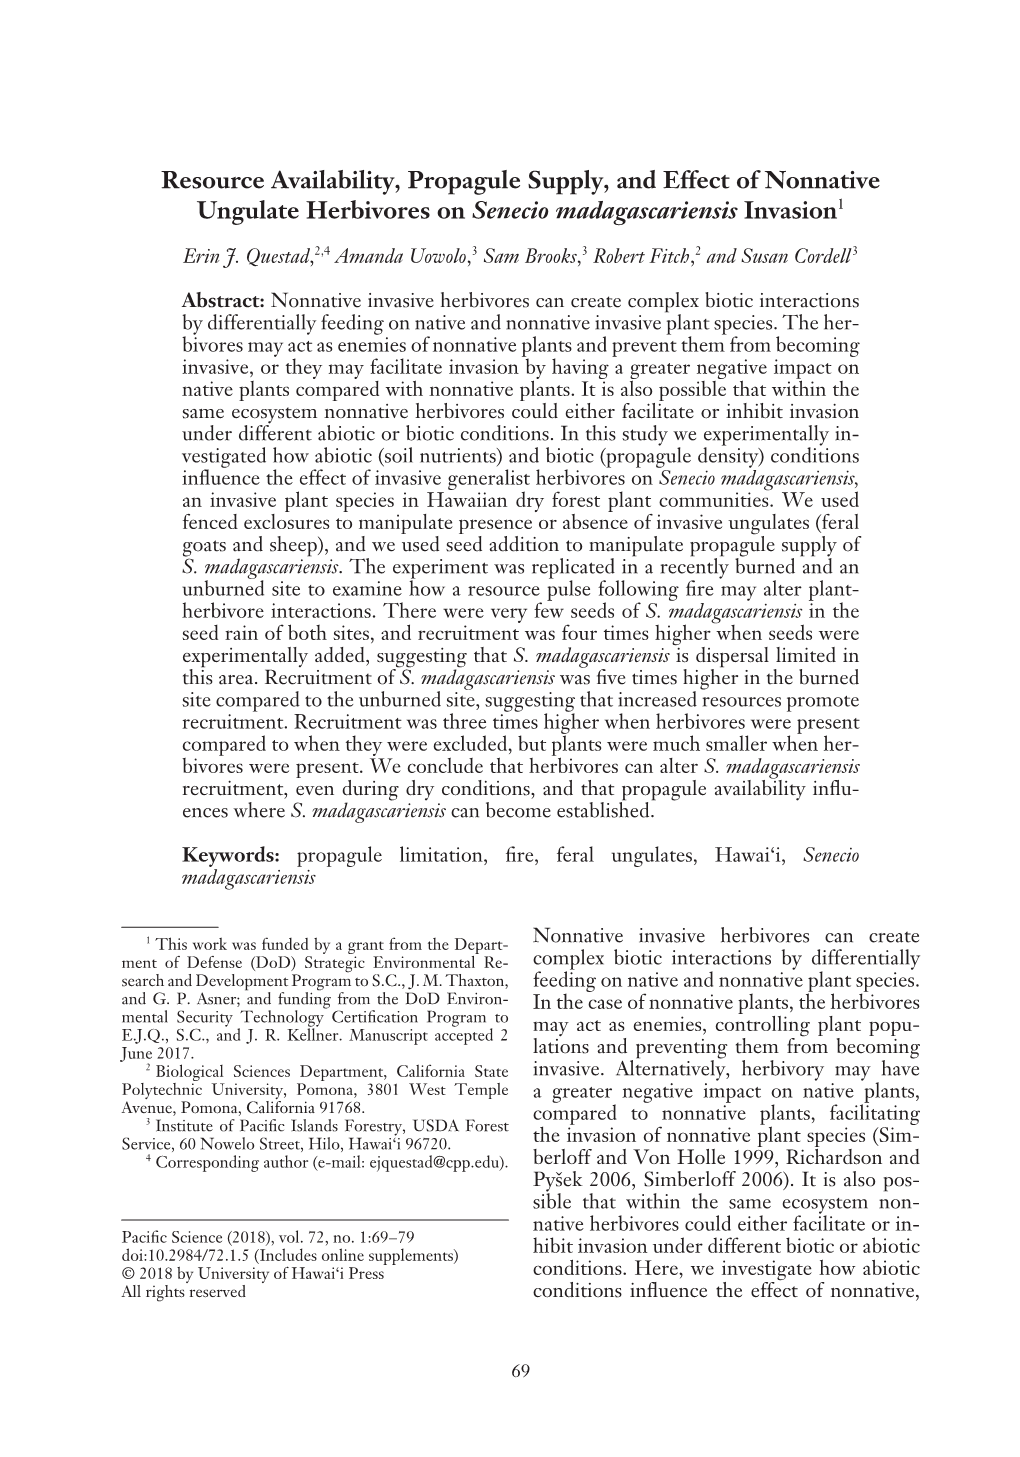 Resource Availability, Propagule Supply, and Effect of Nonnative Ungulate Herbivores on Senecio Madagascariensis Invasion1